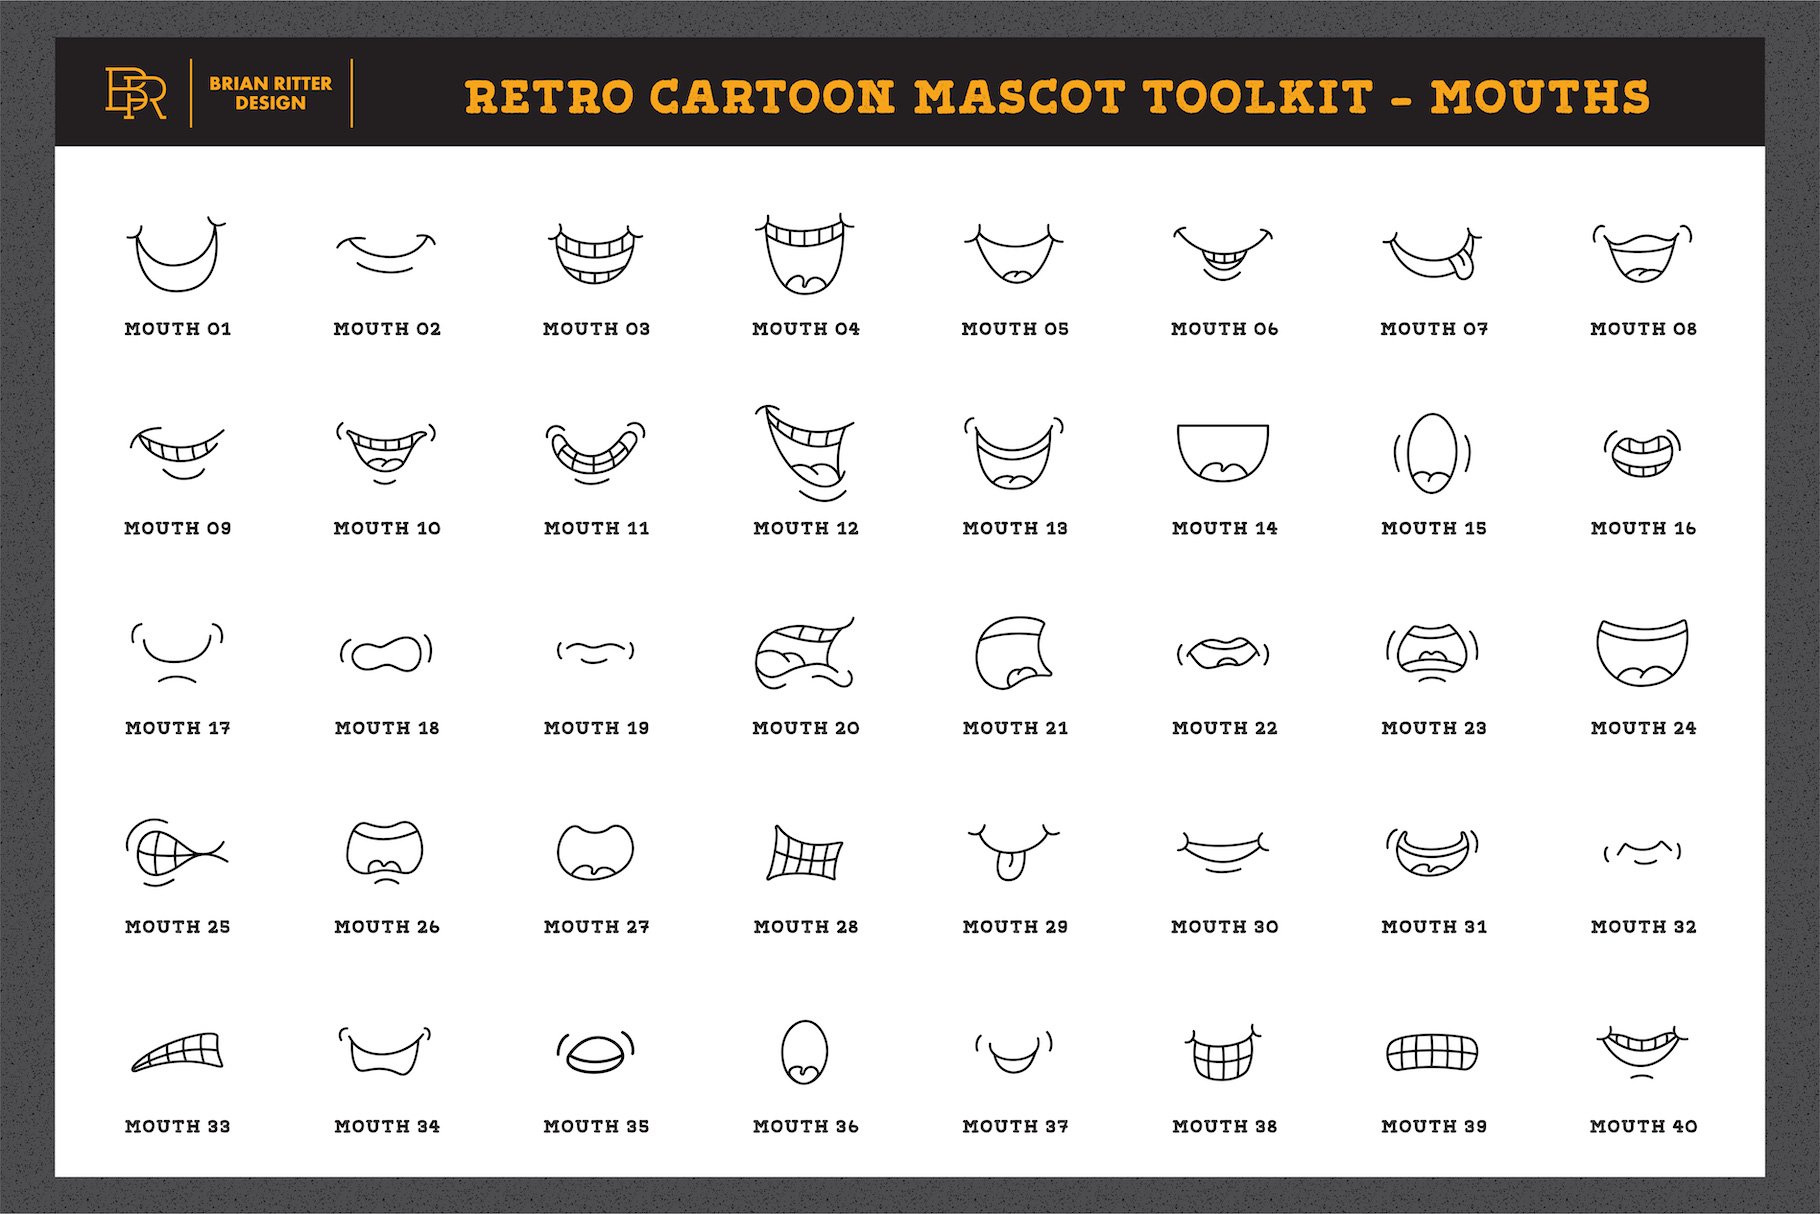 Retro cartoon mascot toolkit - mouths.